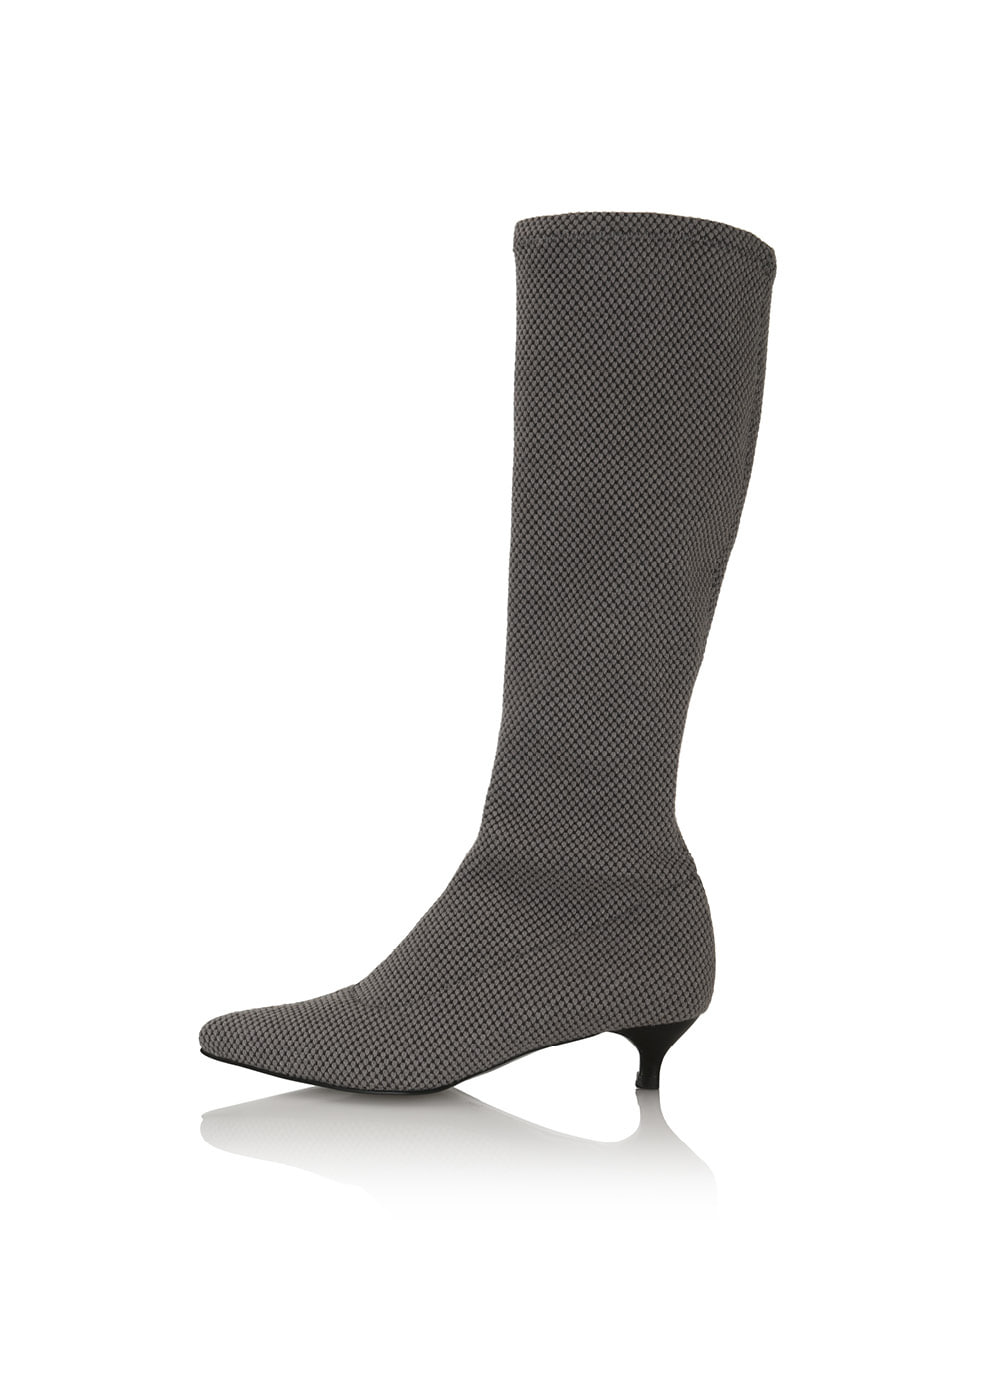 Y.04 Riri Socks Long Boots / Y.04-B16 / 4 colors